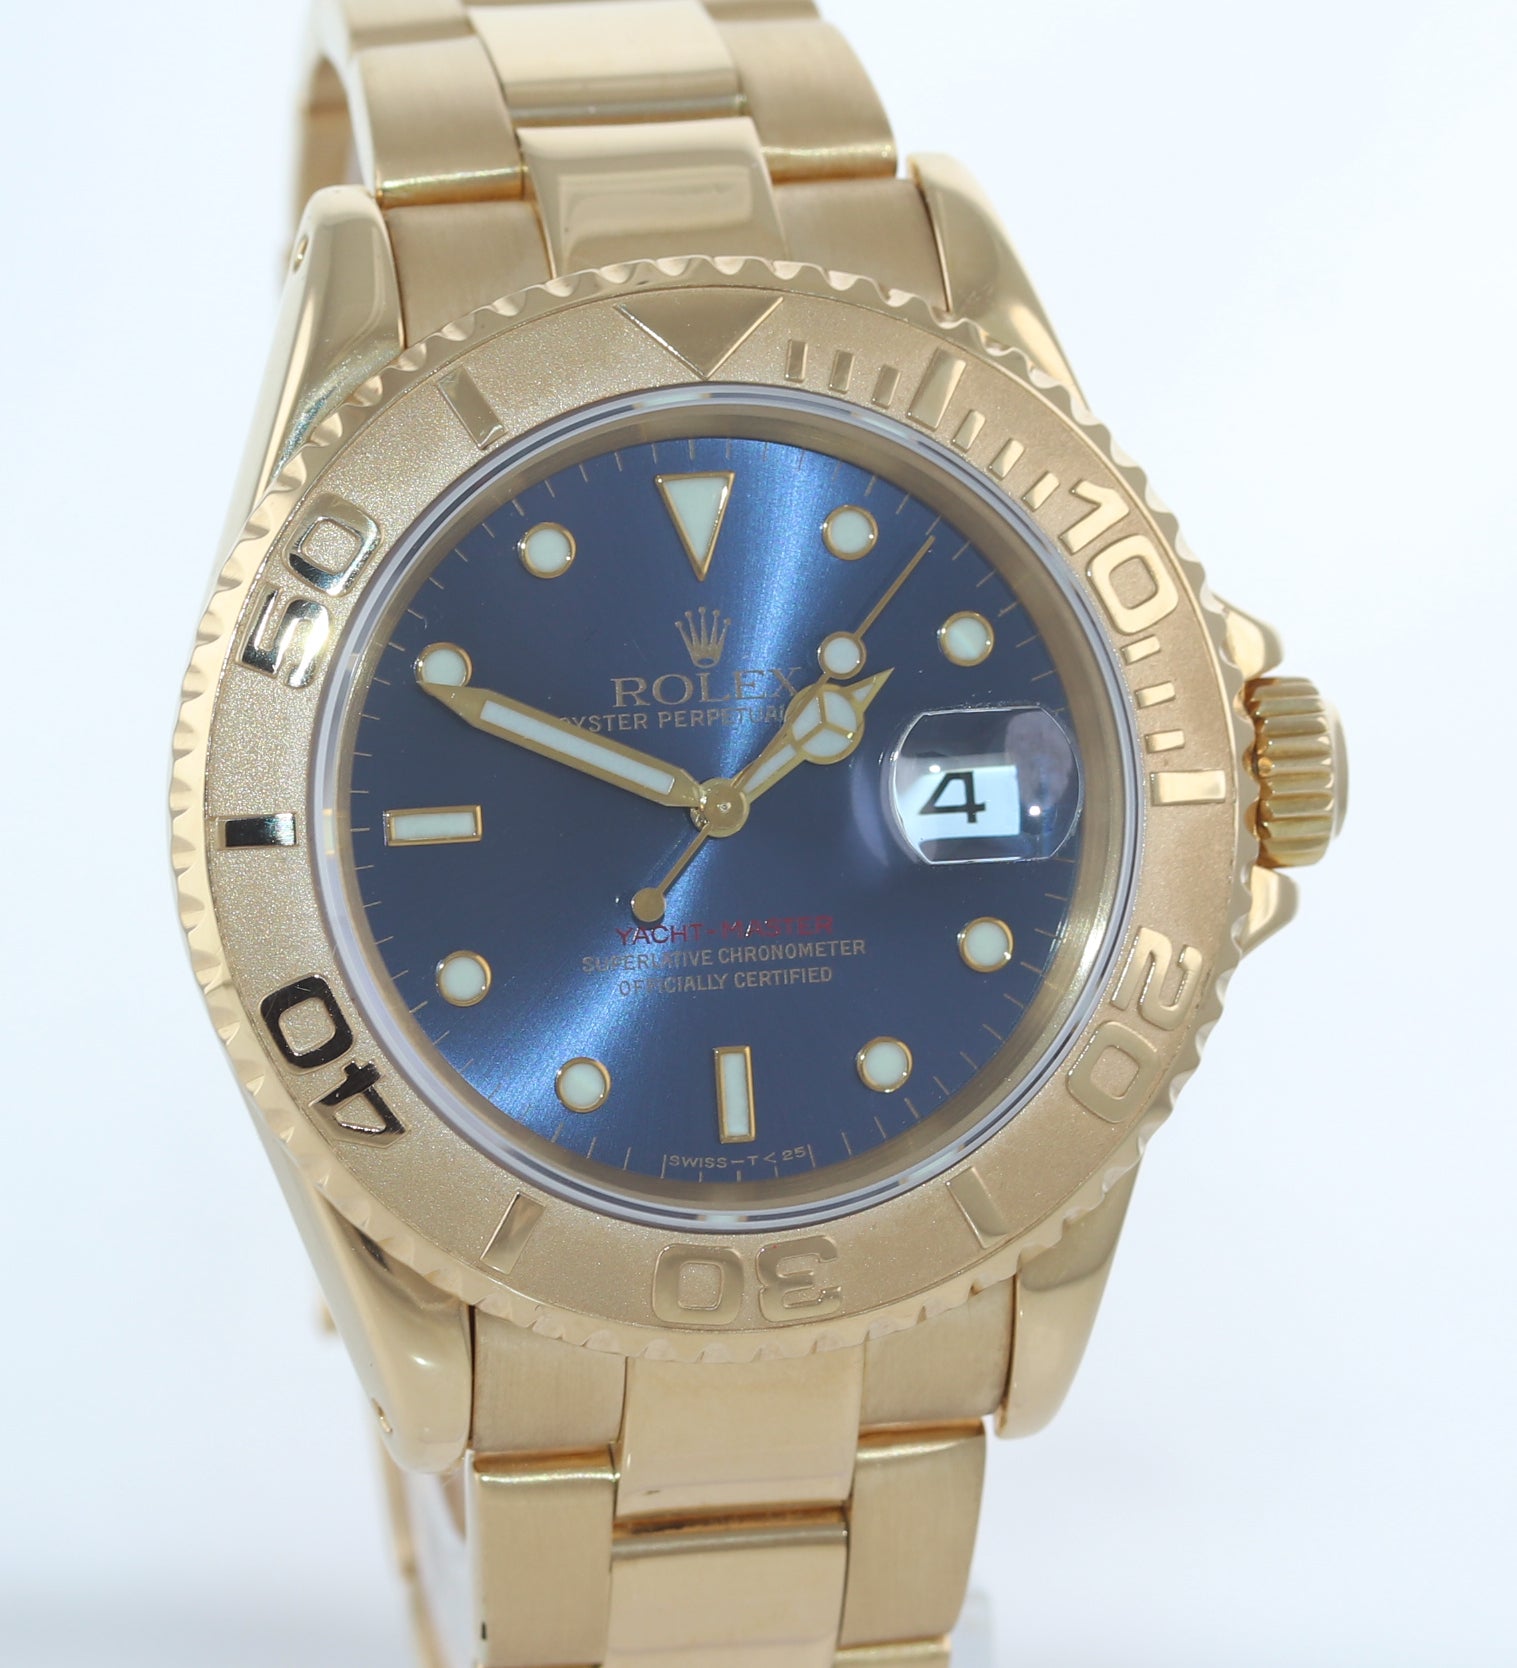 Rolex Yacht-Master 18k Yellow Gold Blue Dial 16628 40mm Watch Box